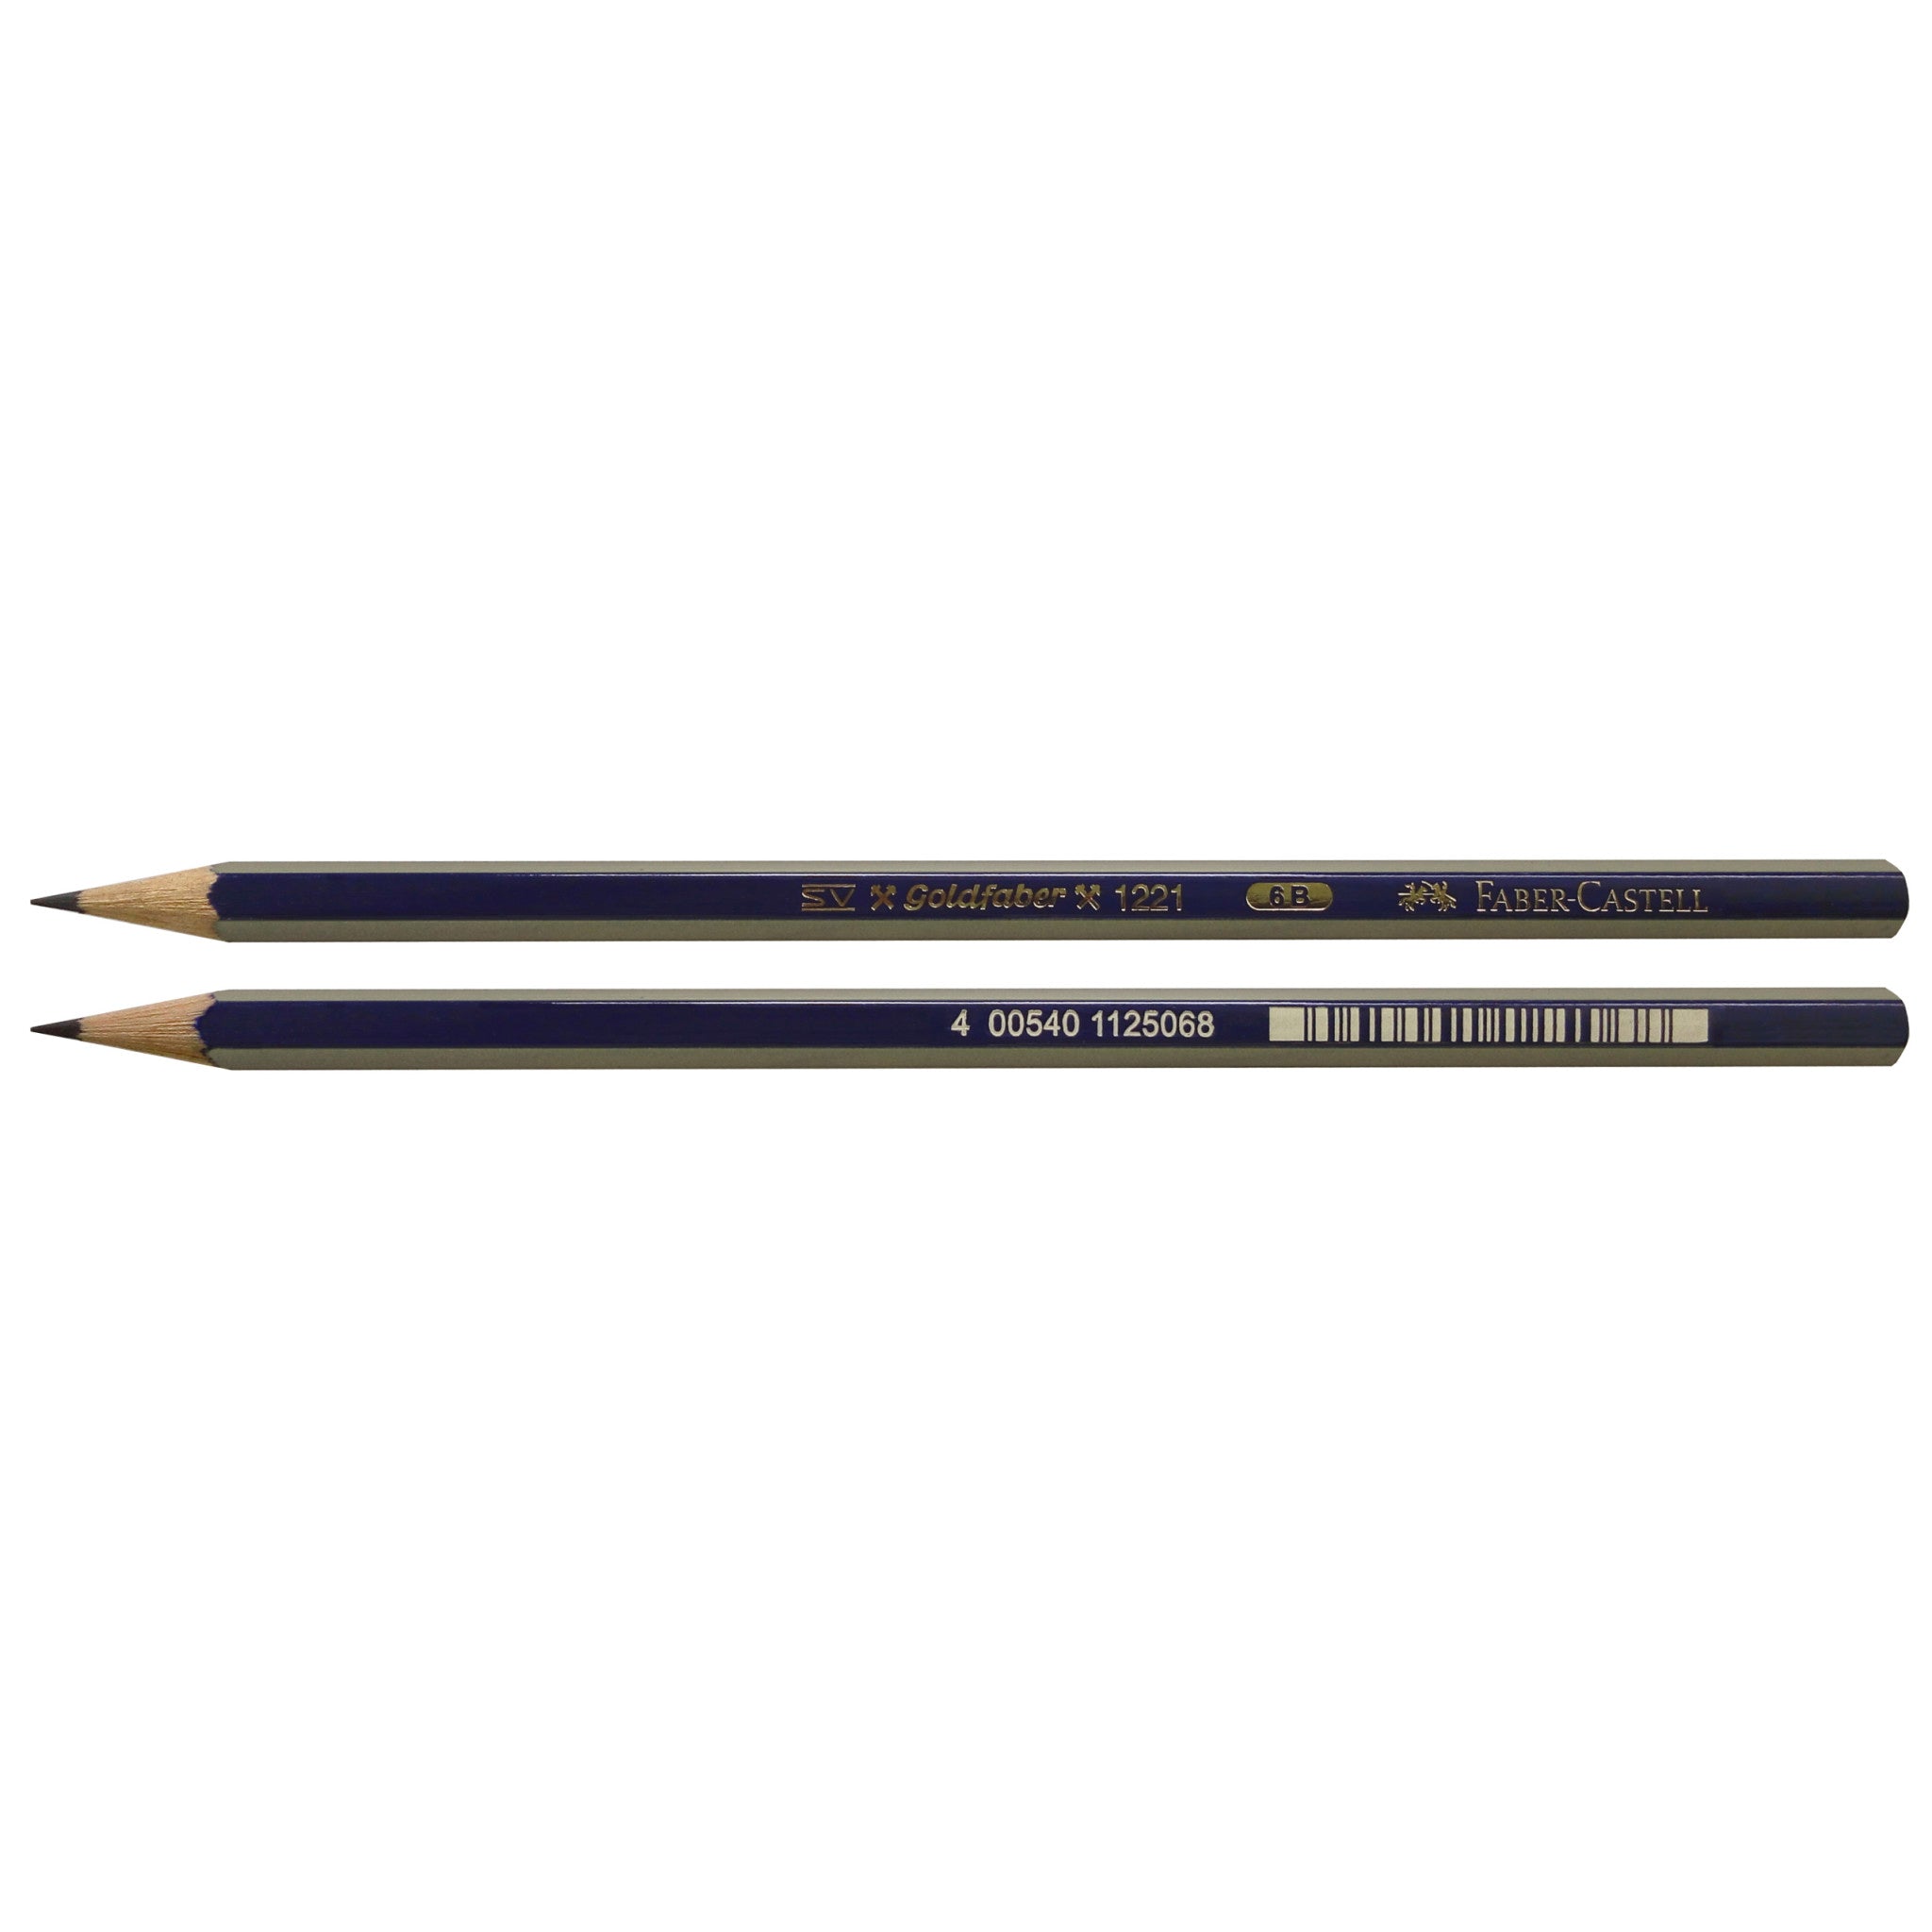 graphite art pencils